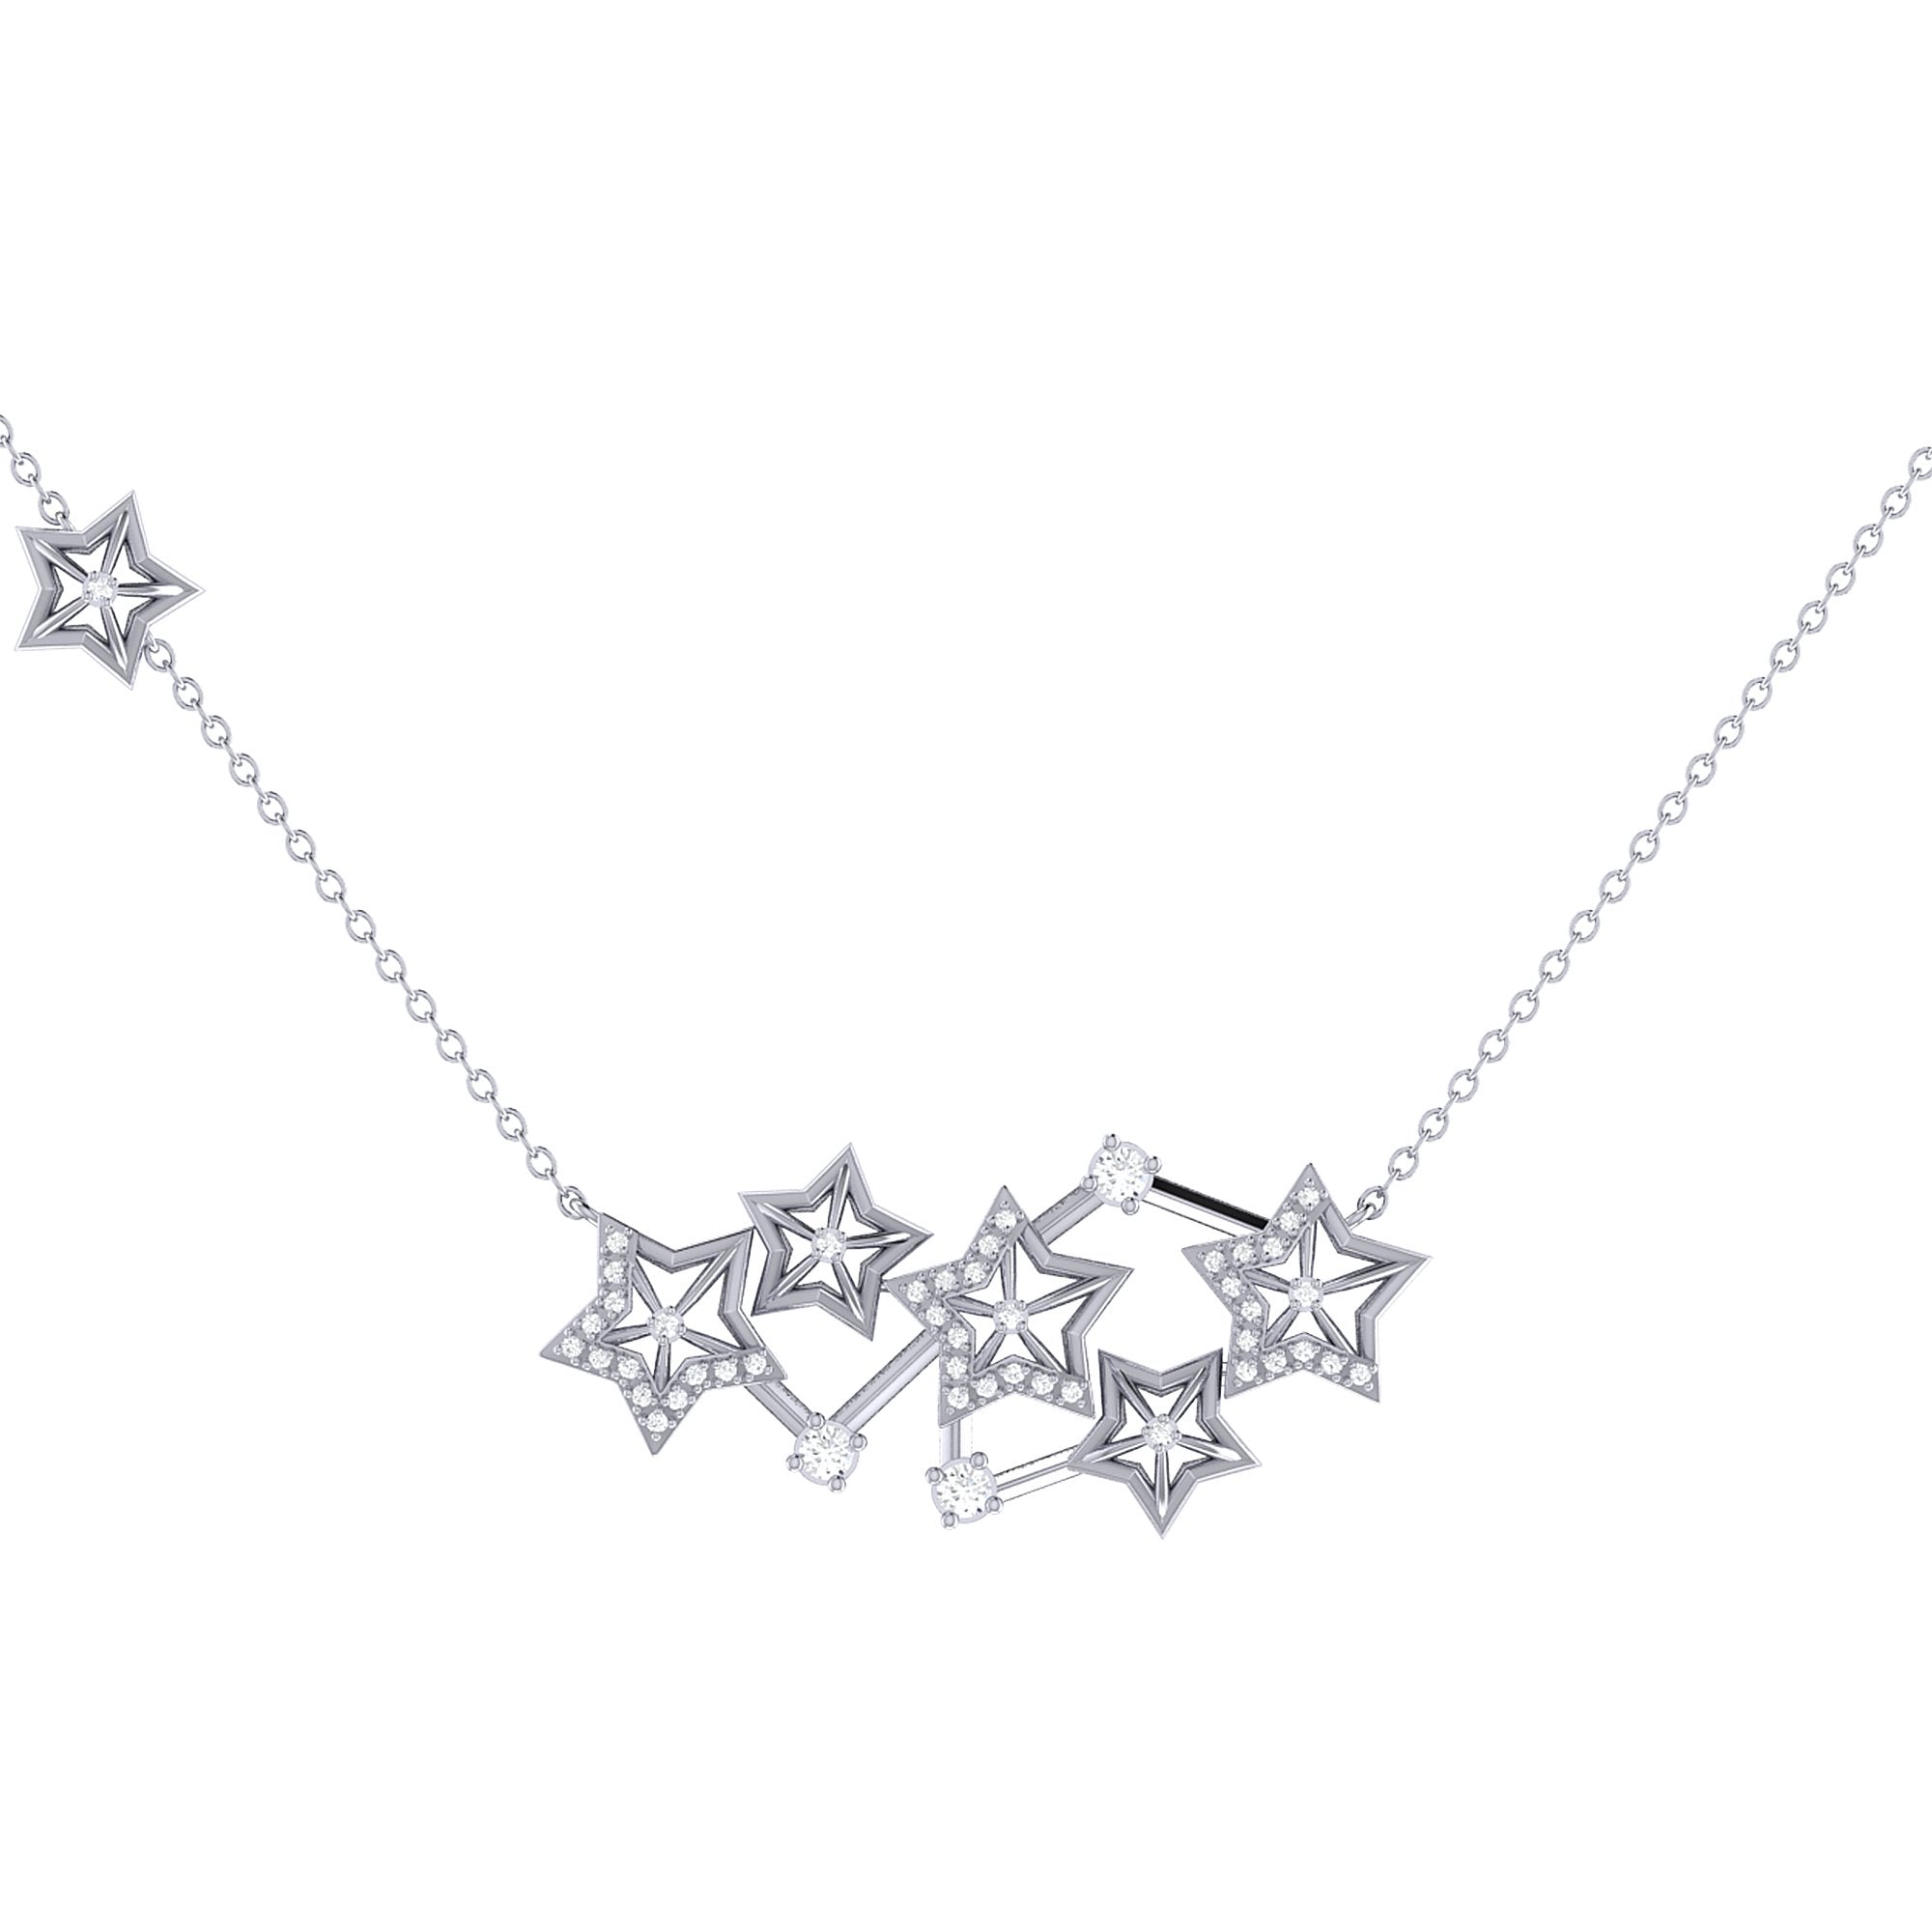 Starburst Constellation Diamond Necklace - 14K White Gold, 0.22 Carats Genuine Diamonds, 18" Cable Chain - Jewelry & Watches - Bijou Her -  -  - 